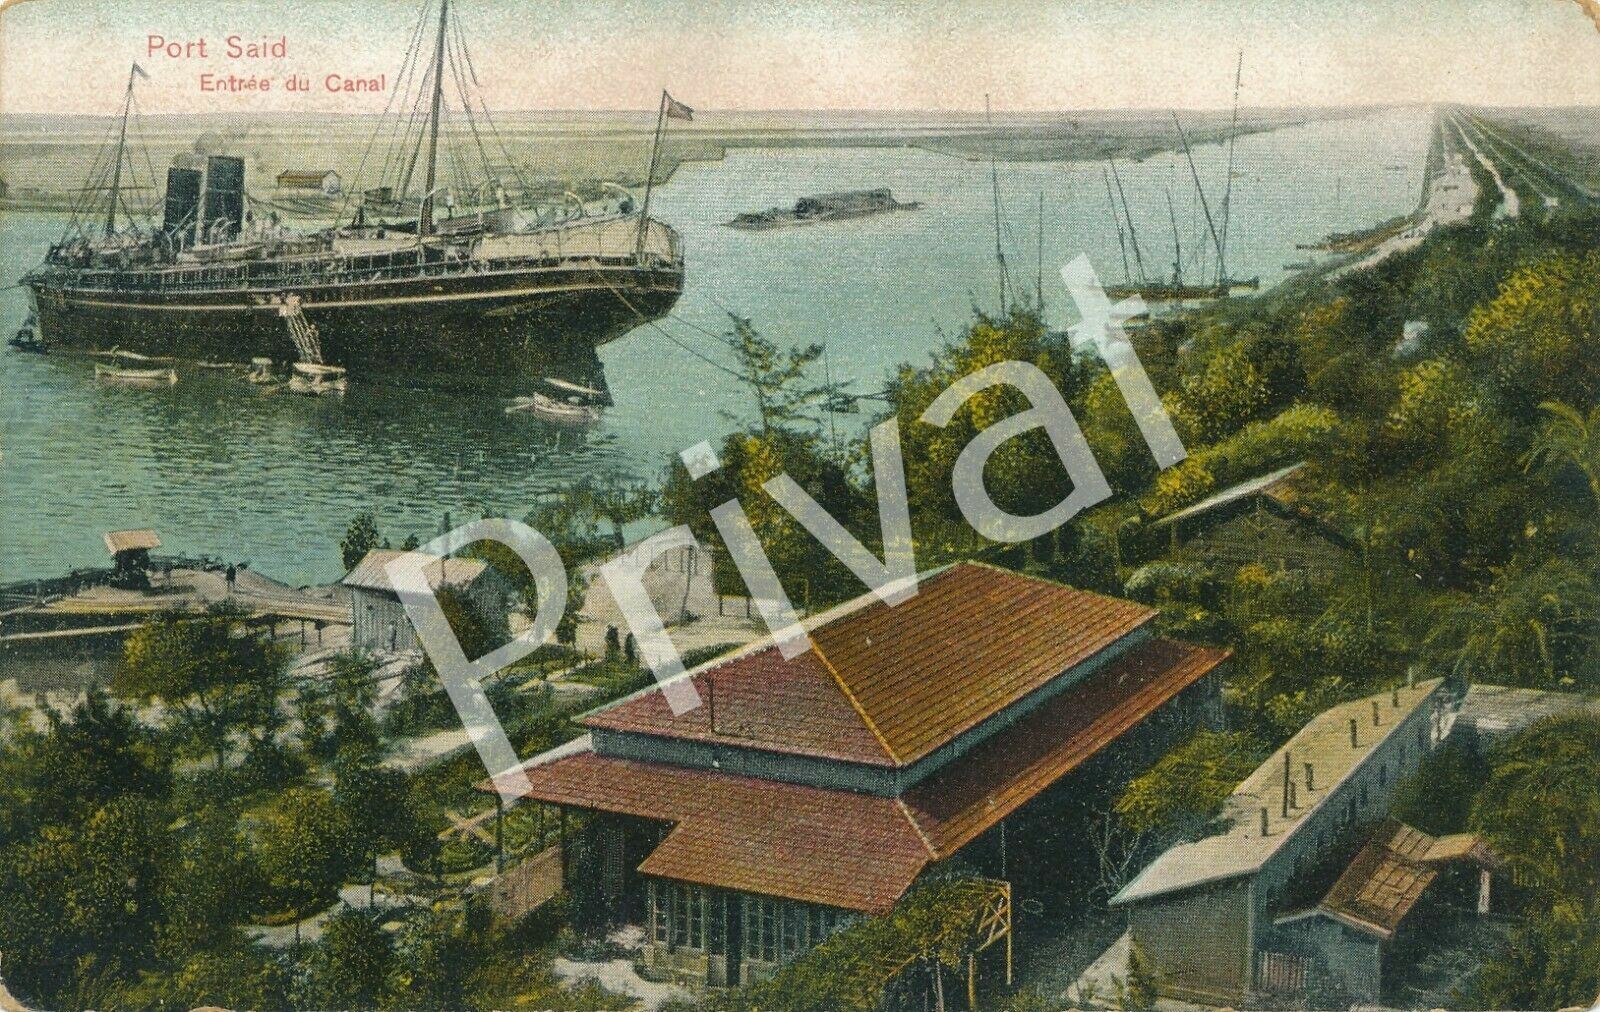 Photo Pk S. M. S. Geier Imperial Navy Port Said Suez Channel 1913/14 Weltreise